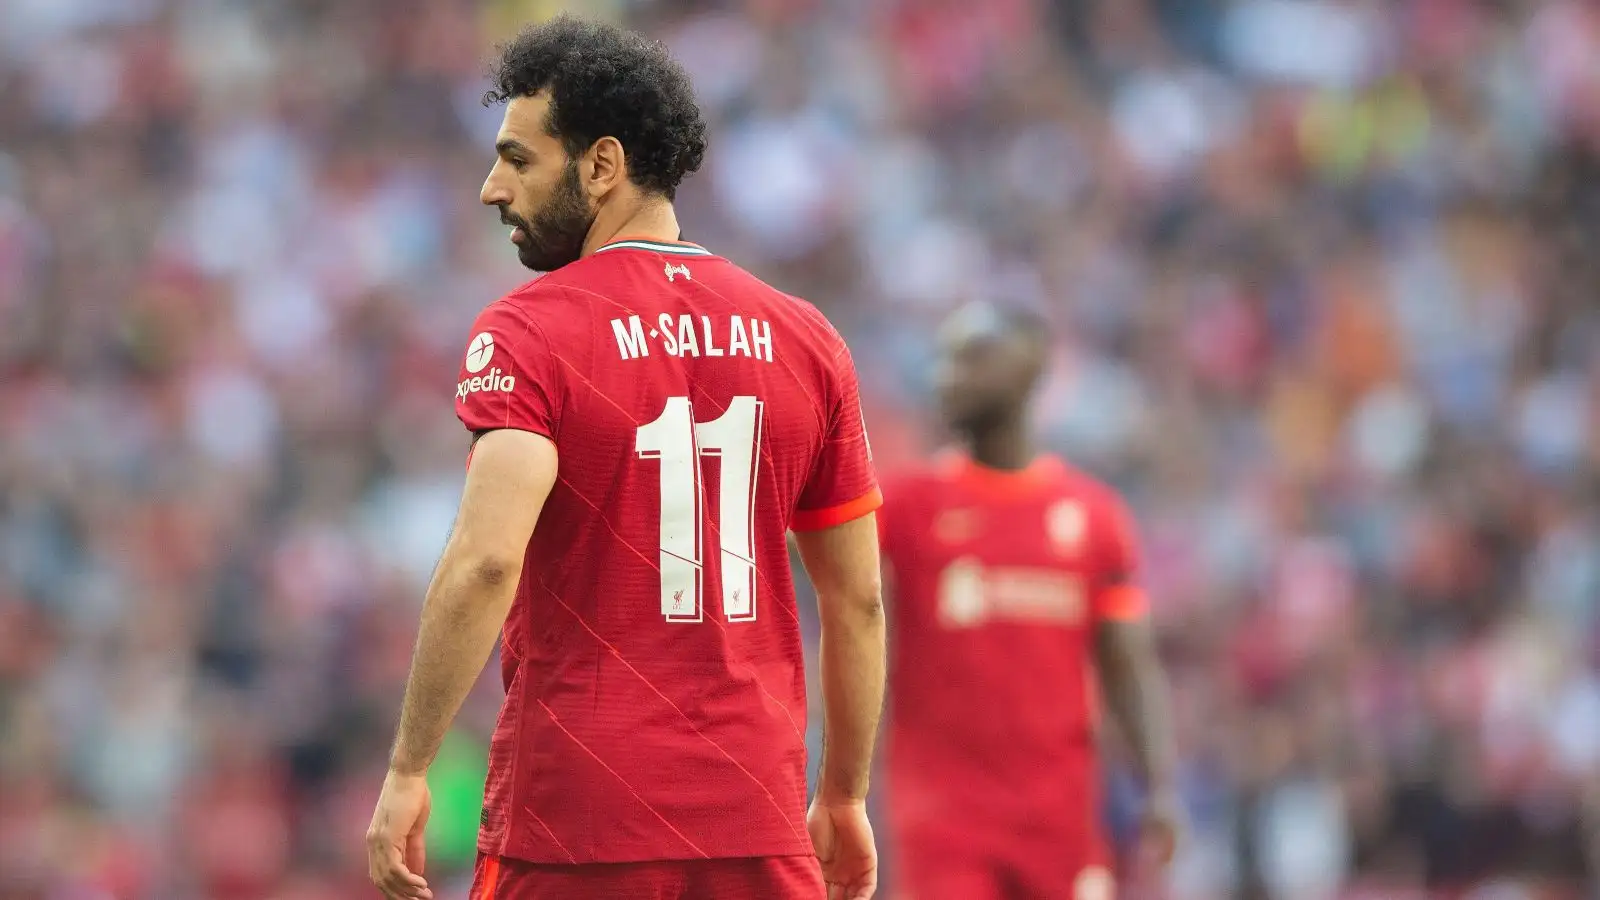 Liverpool striker Mo Salah watches play